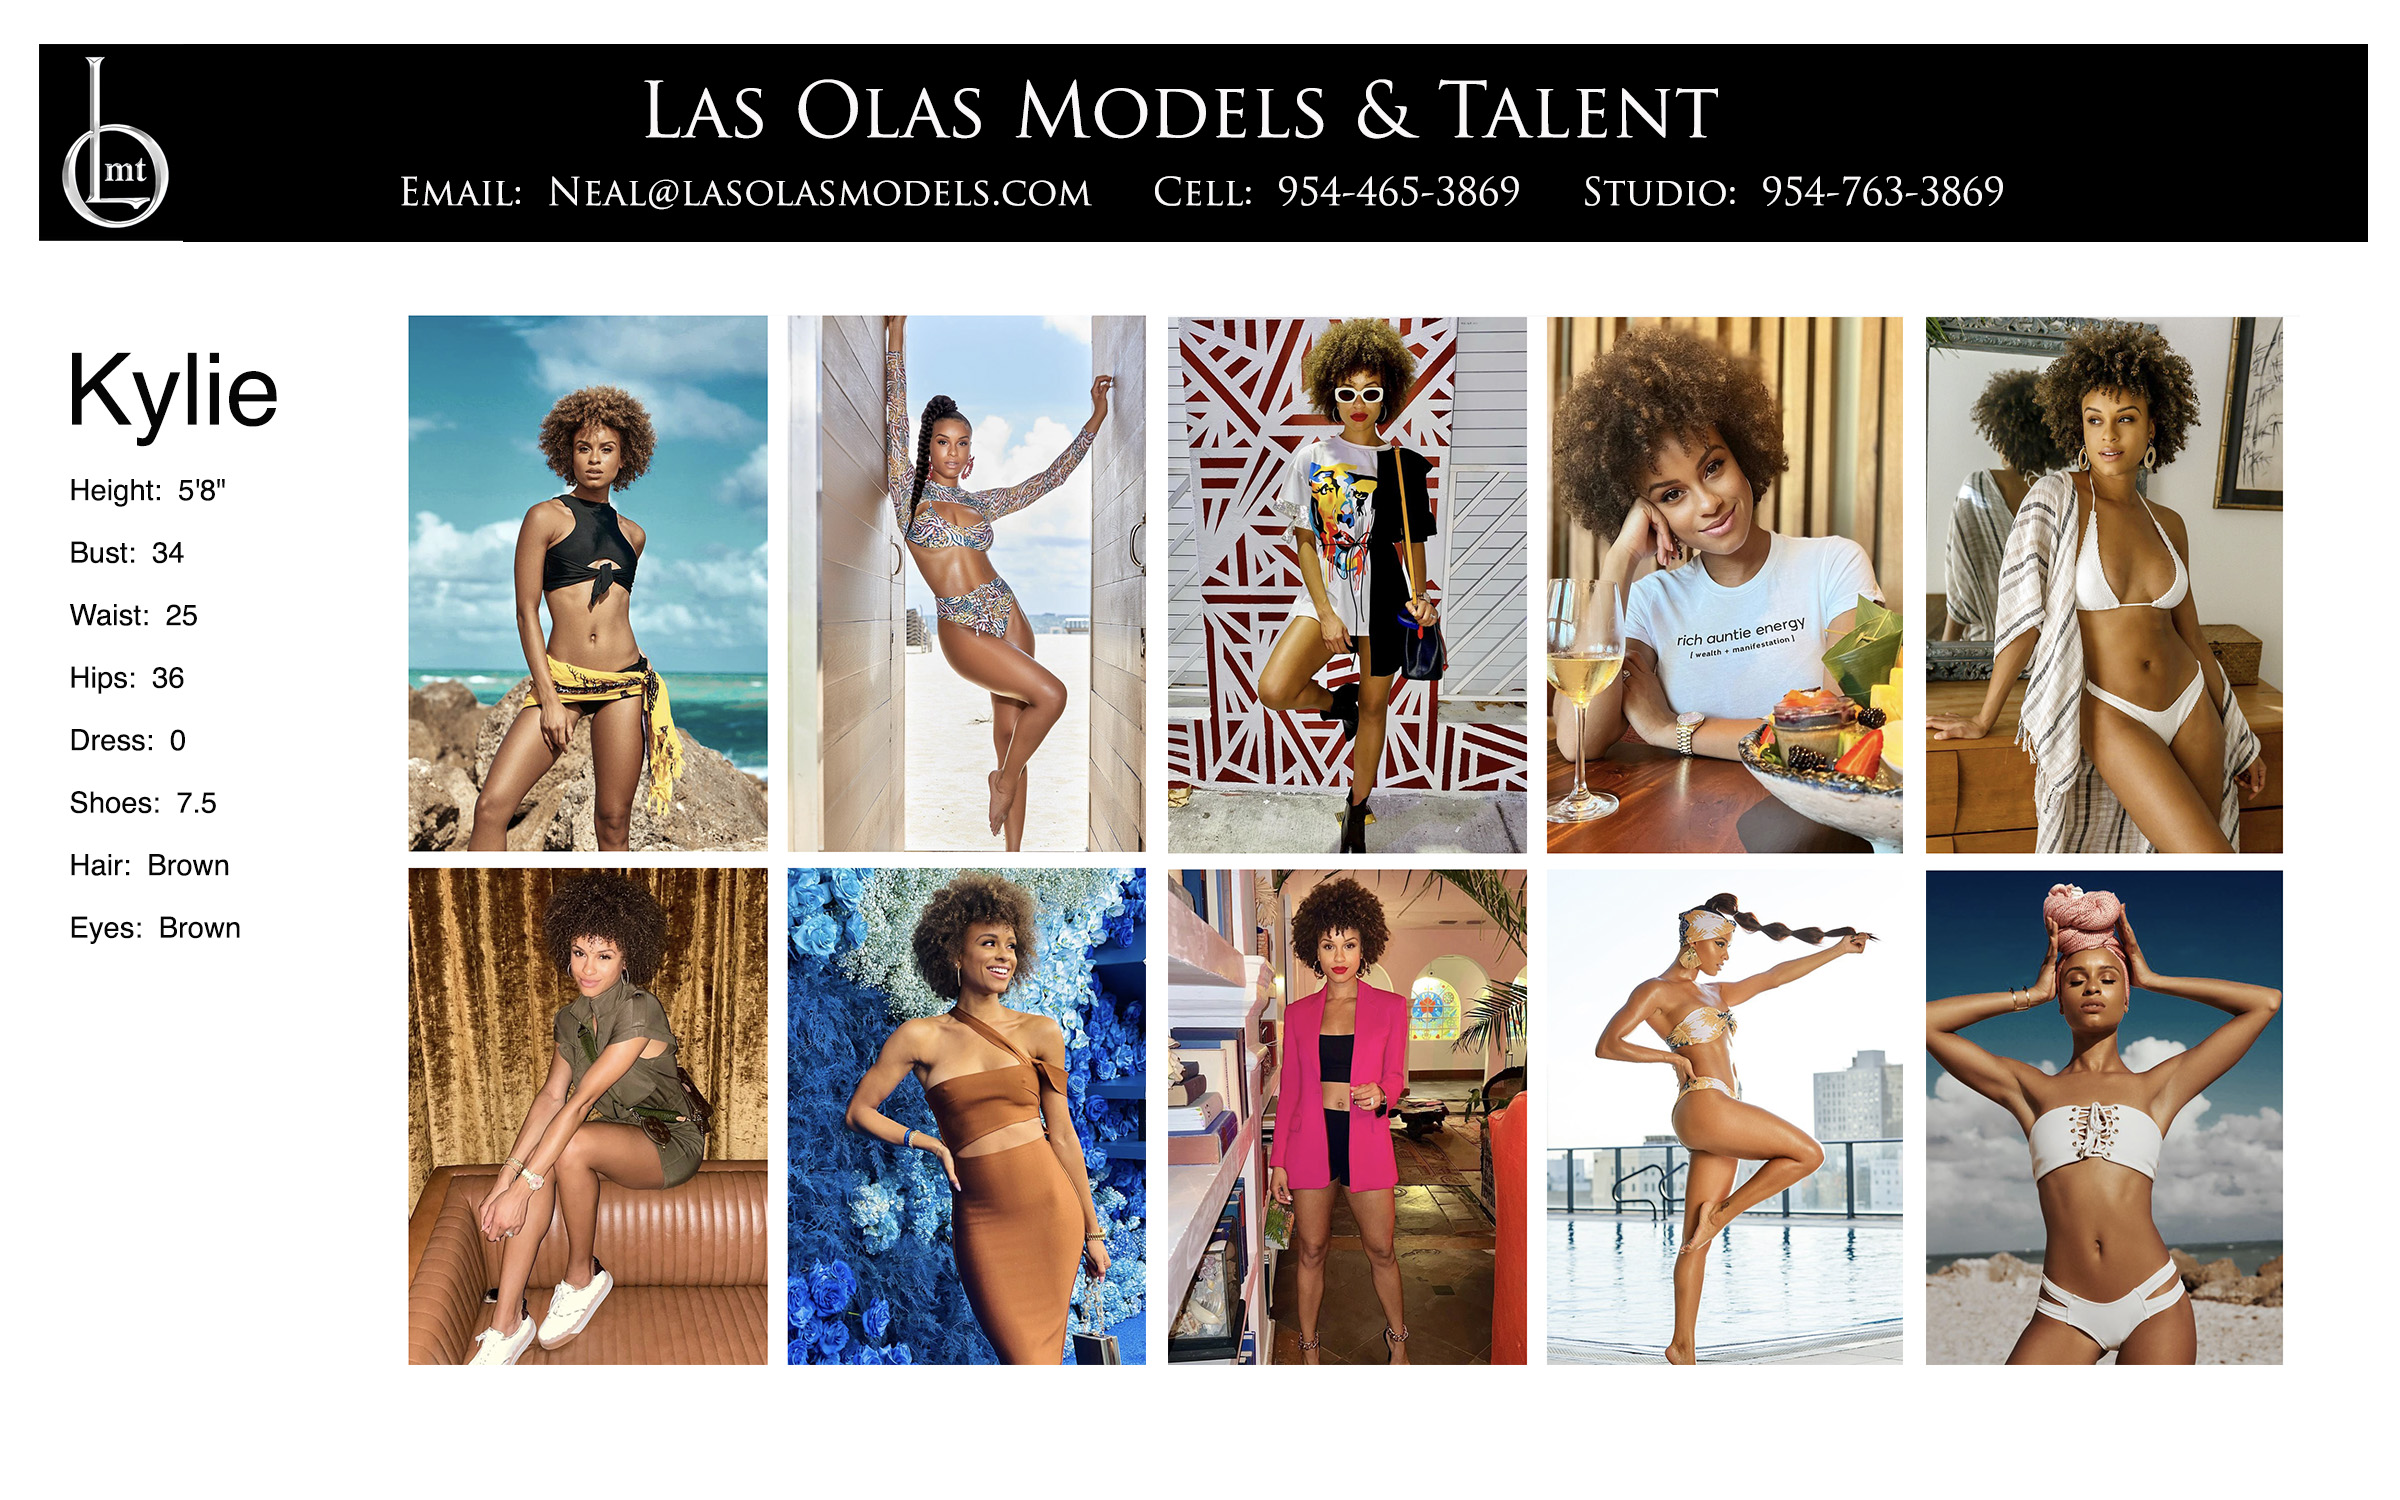 Models Fort Lauderdale Miami South Florida - Print Video Commercial Catalog - Las Olas Models & Talent - Kylie Comp